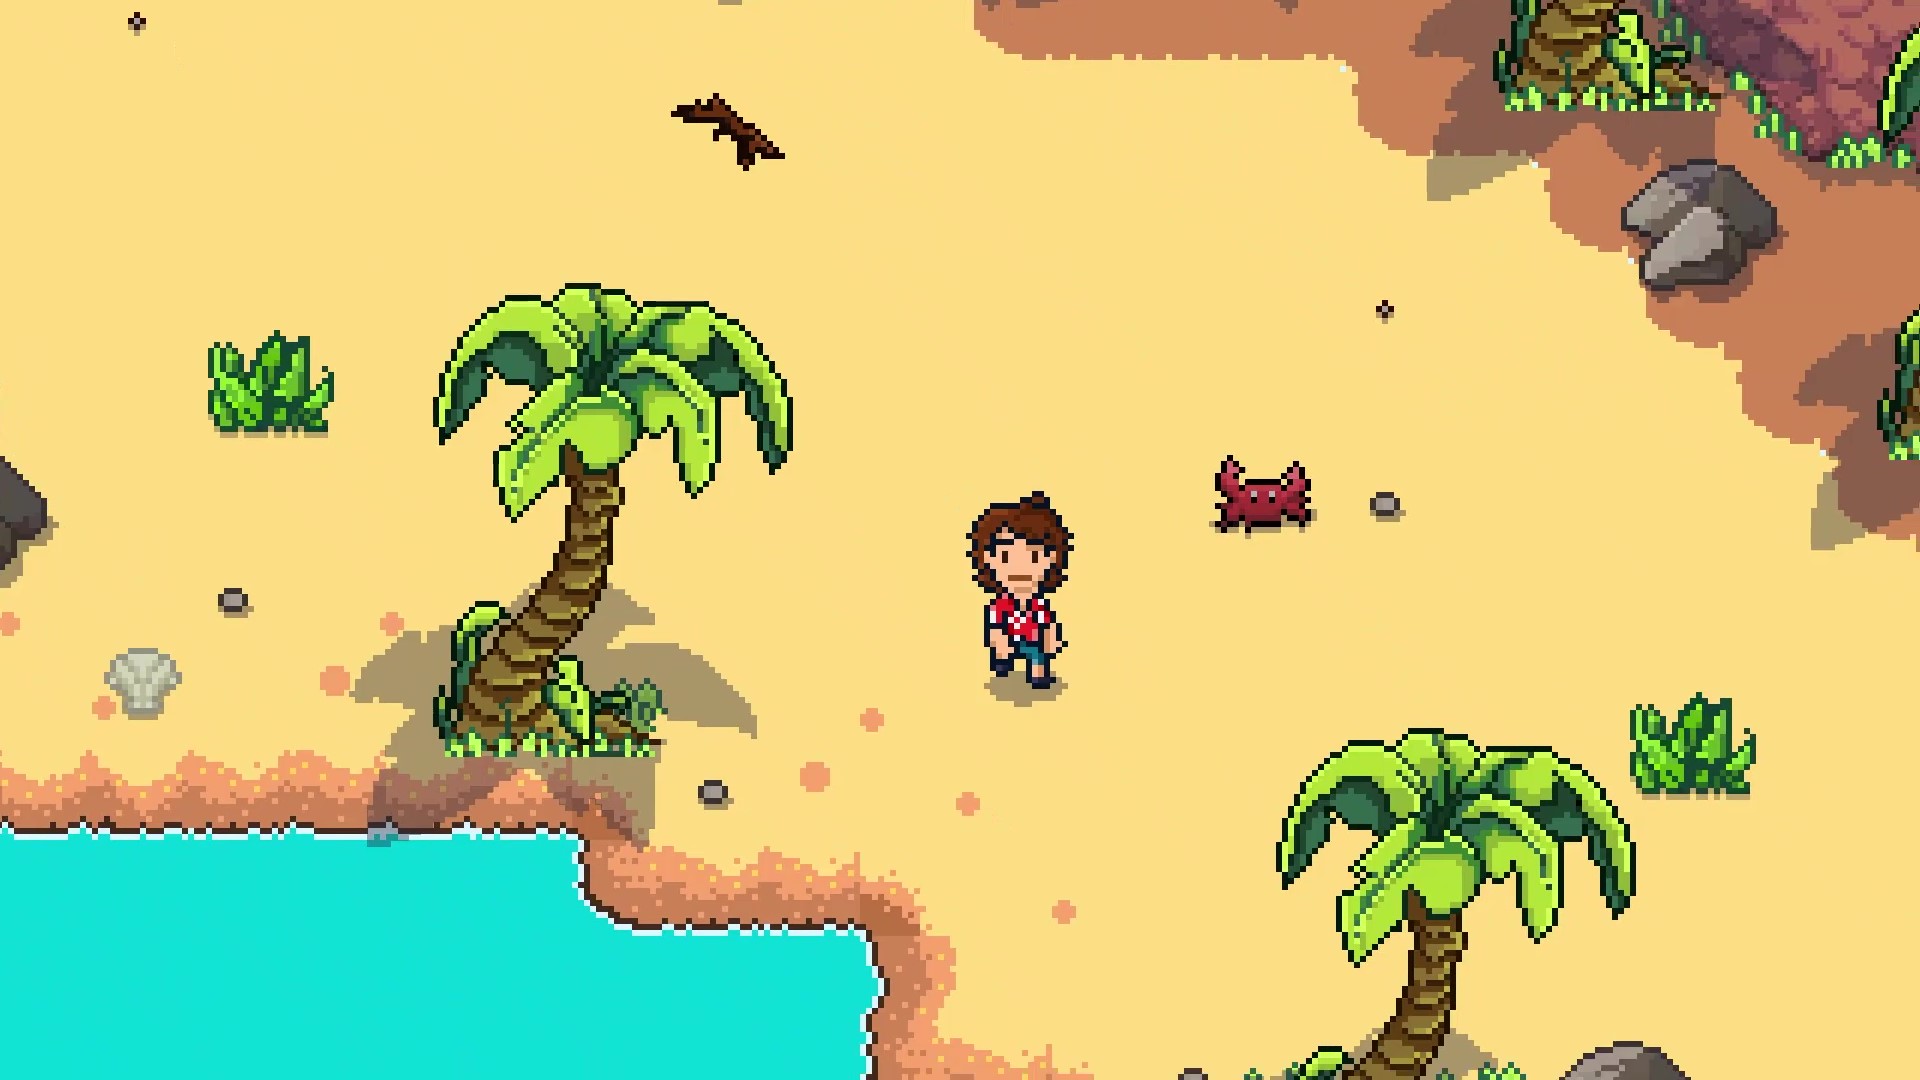 Main character walking on the beach